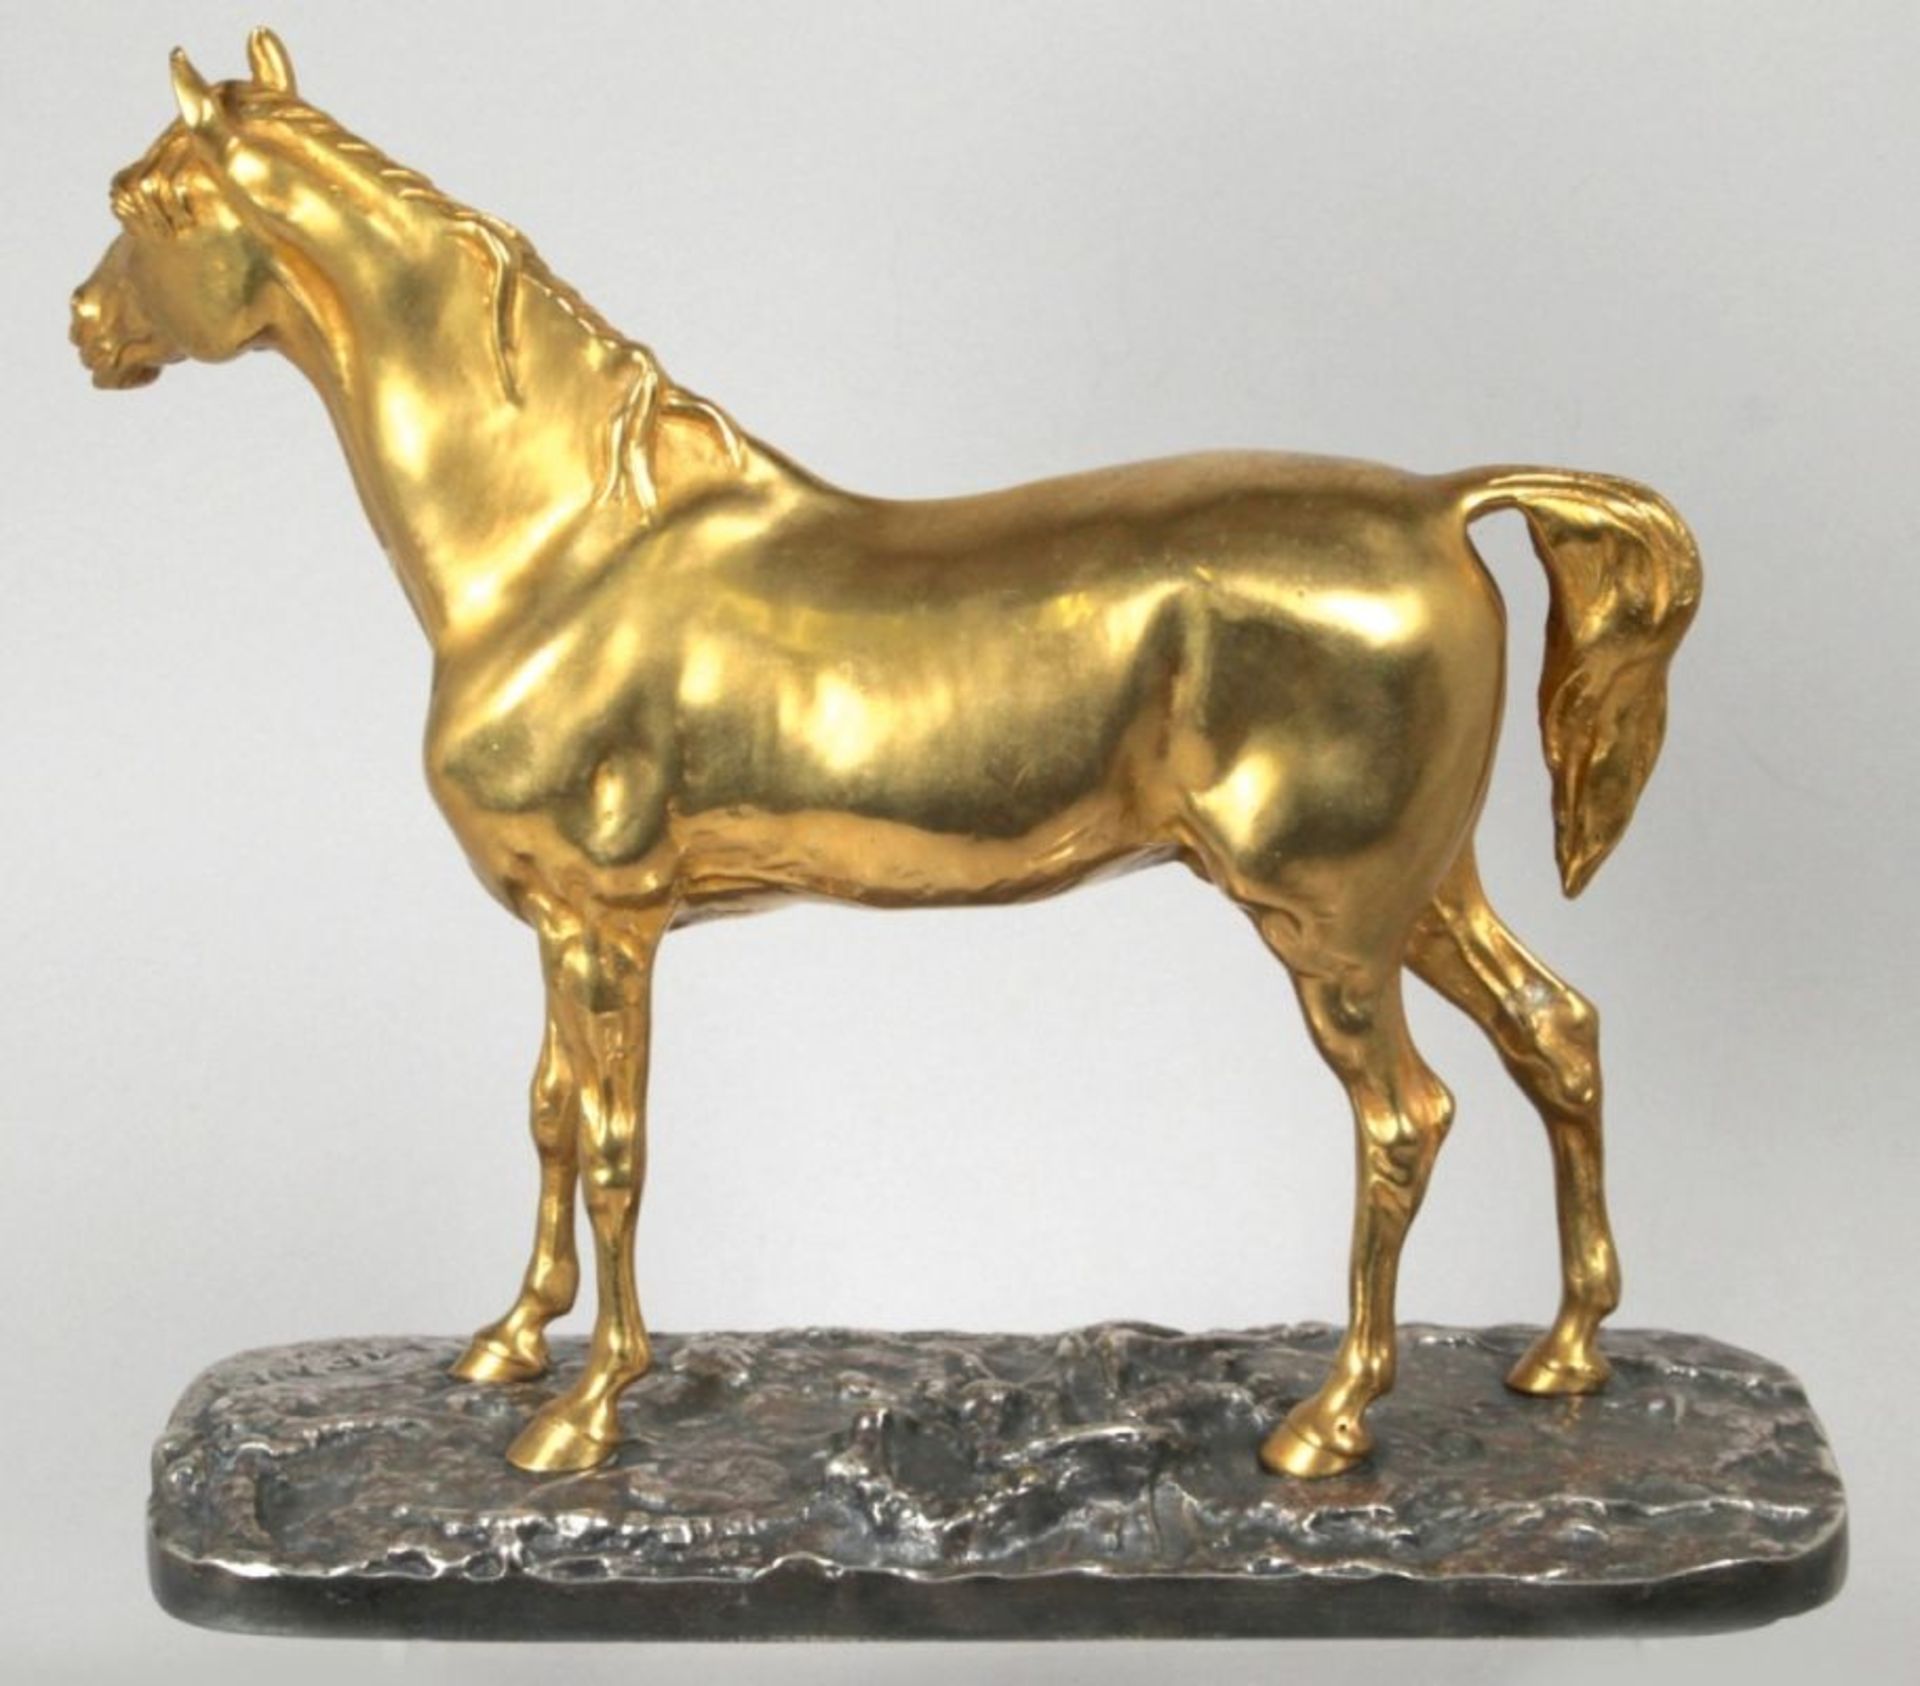 Bronze-Tierplastik, "Pferd", Mene, Pierre Jules, Paris 1810 - 1879 ebenda, vollplastische, - Bild 2 aus 4